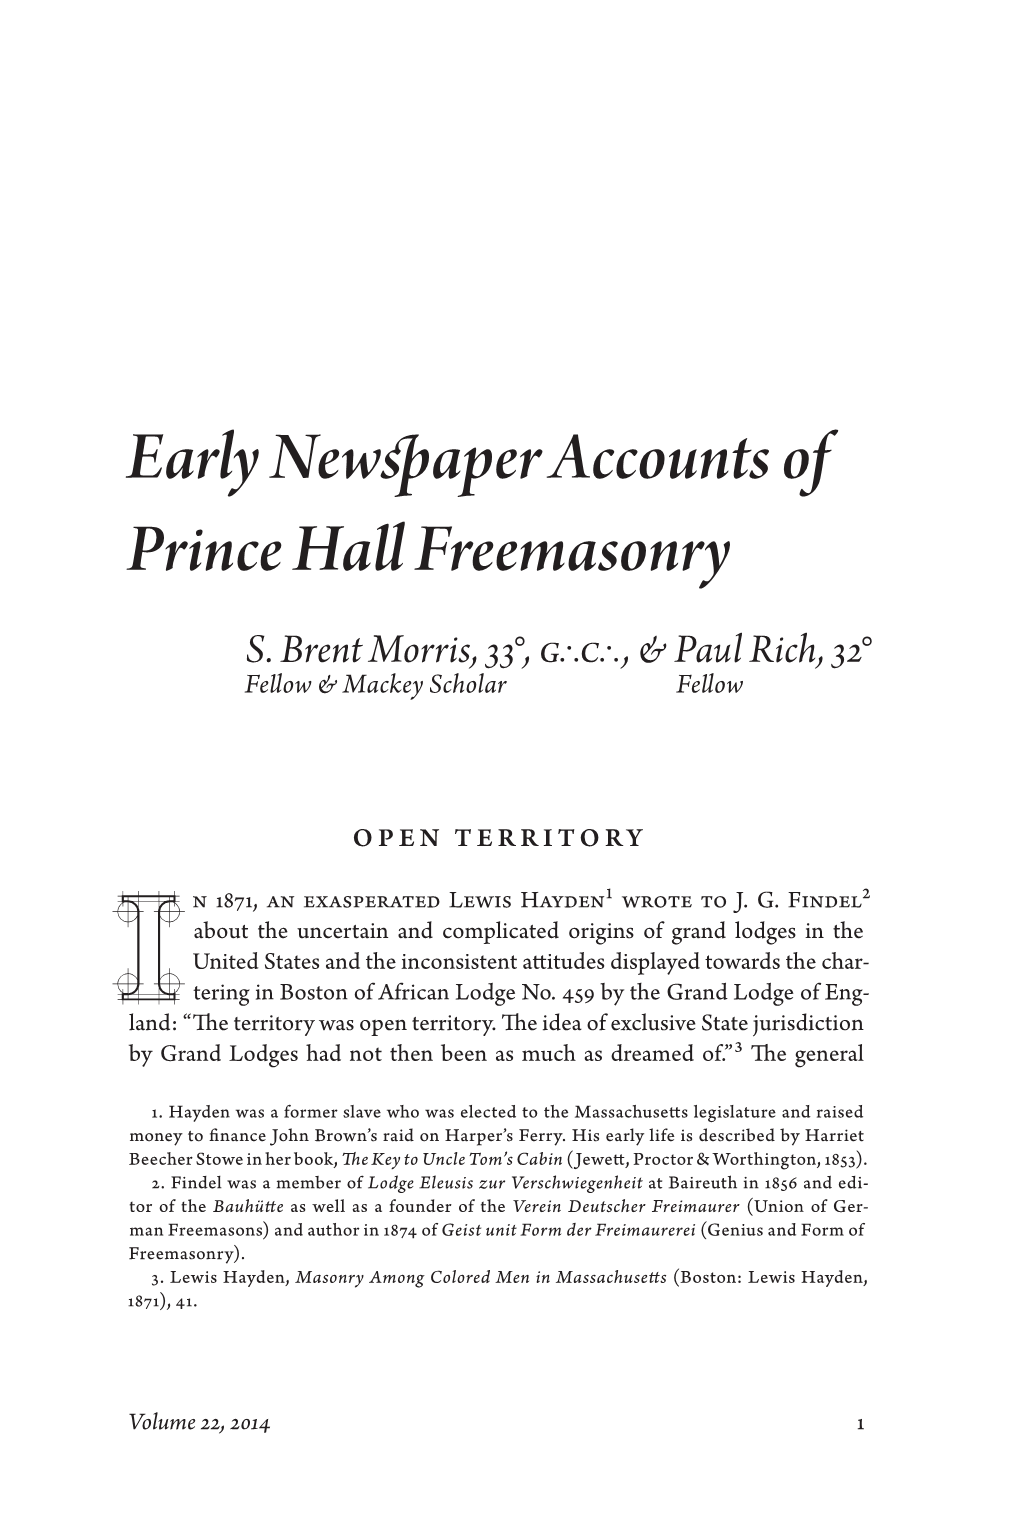 Early Newspaper Accounts of Prince Hall Freemasonry